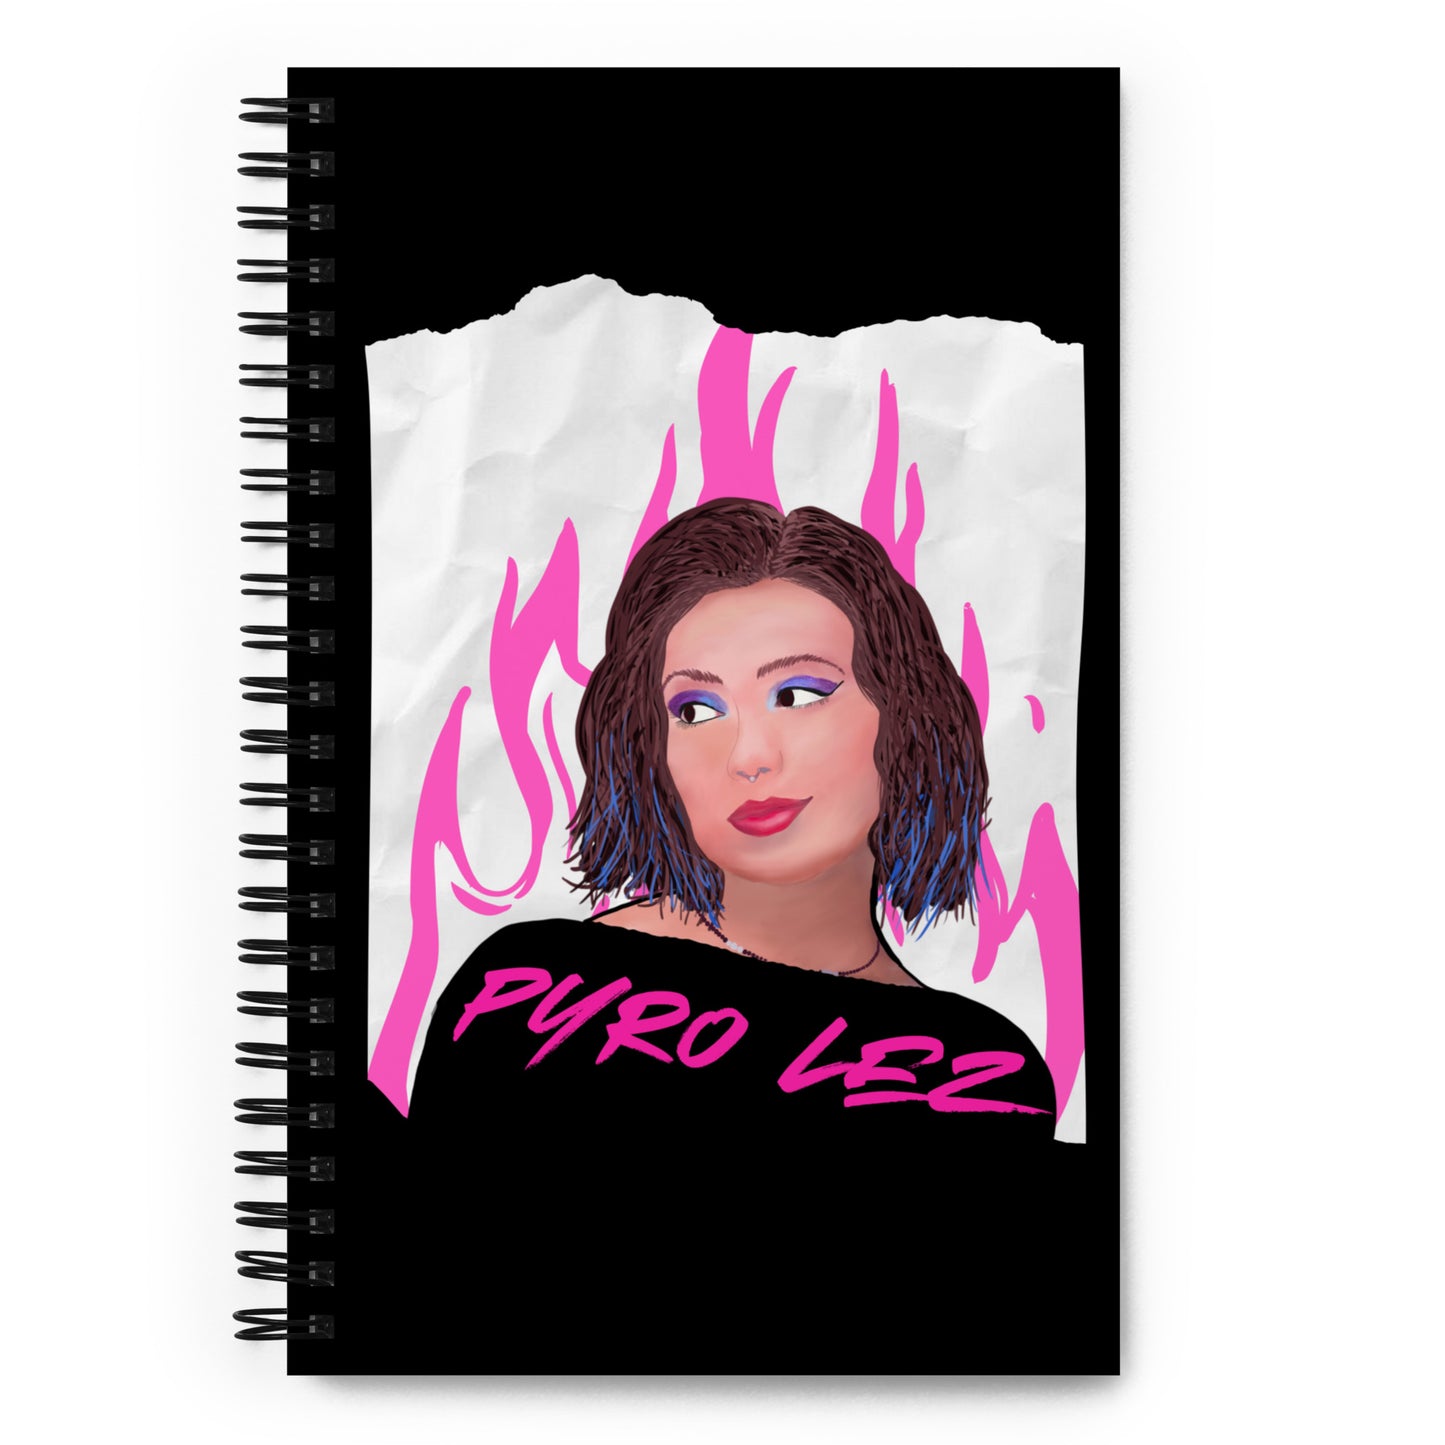 Janis: Pyro Lez Spiral Notebook